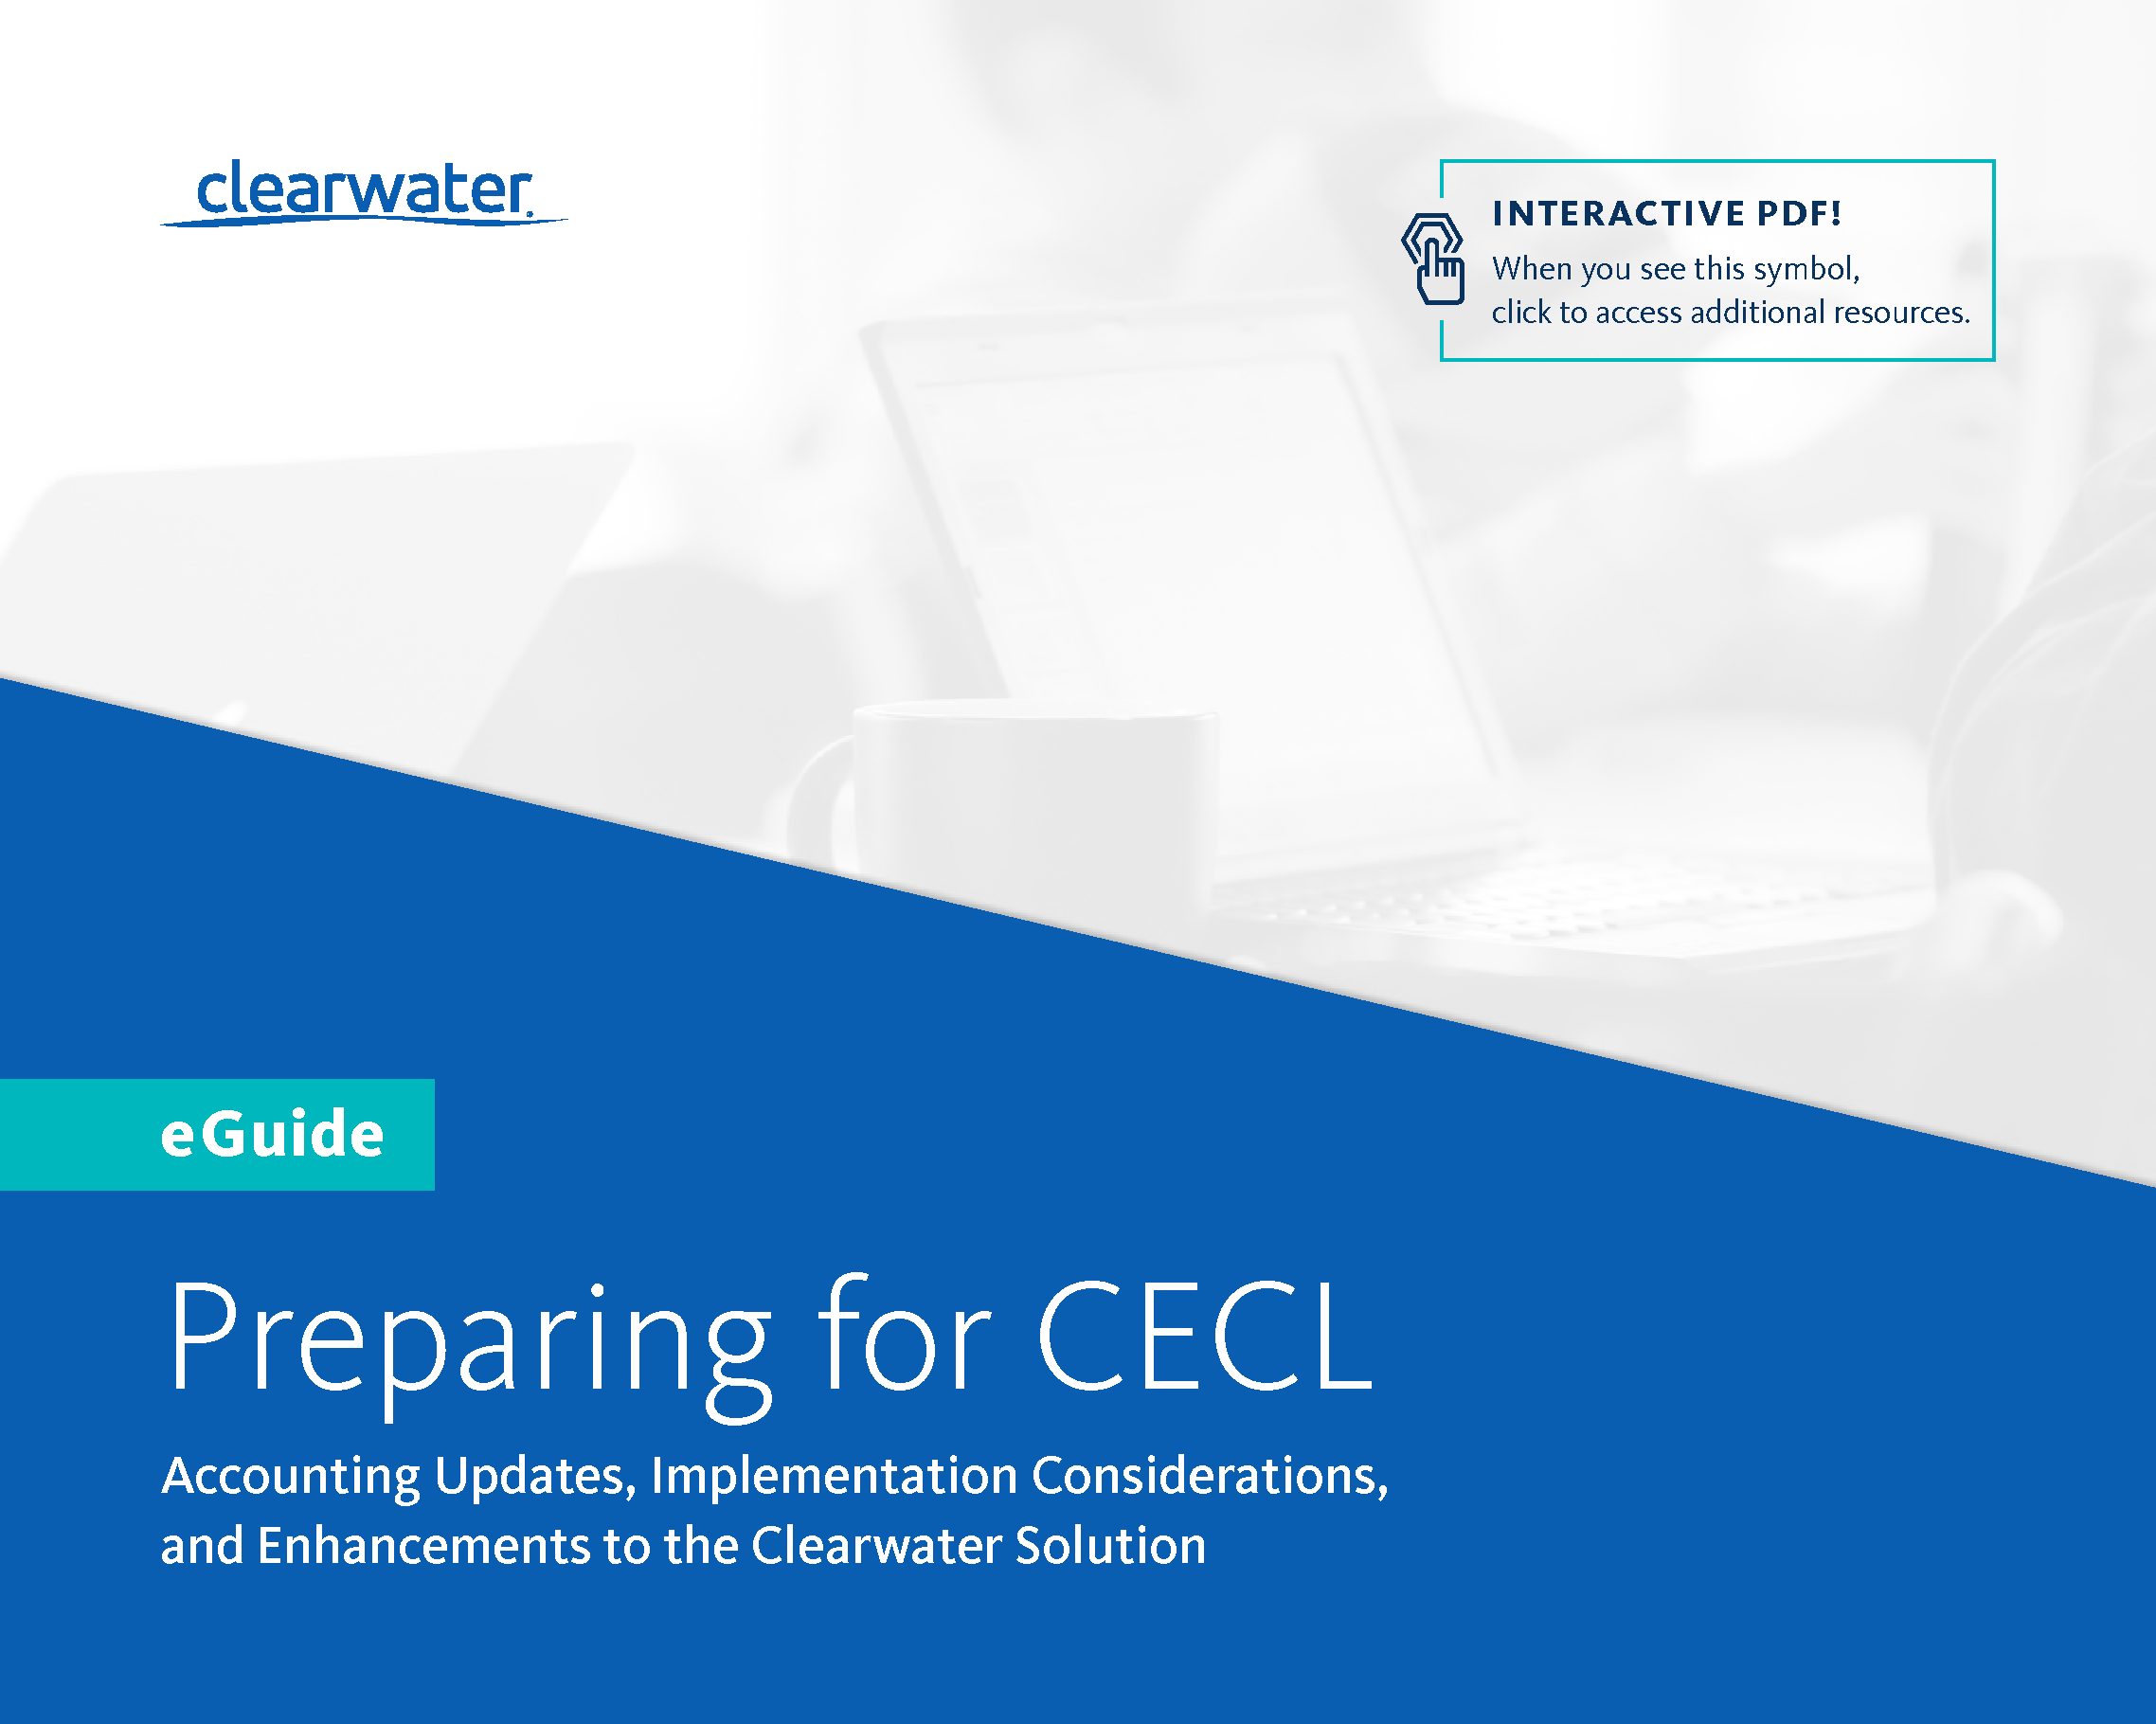 eGuide: Preparing for CECL